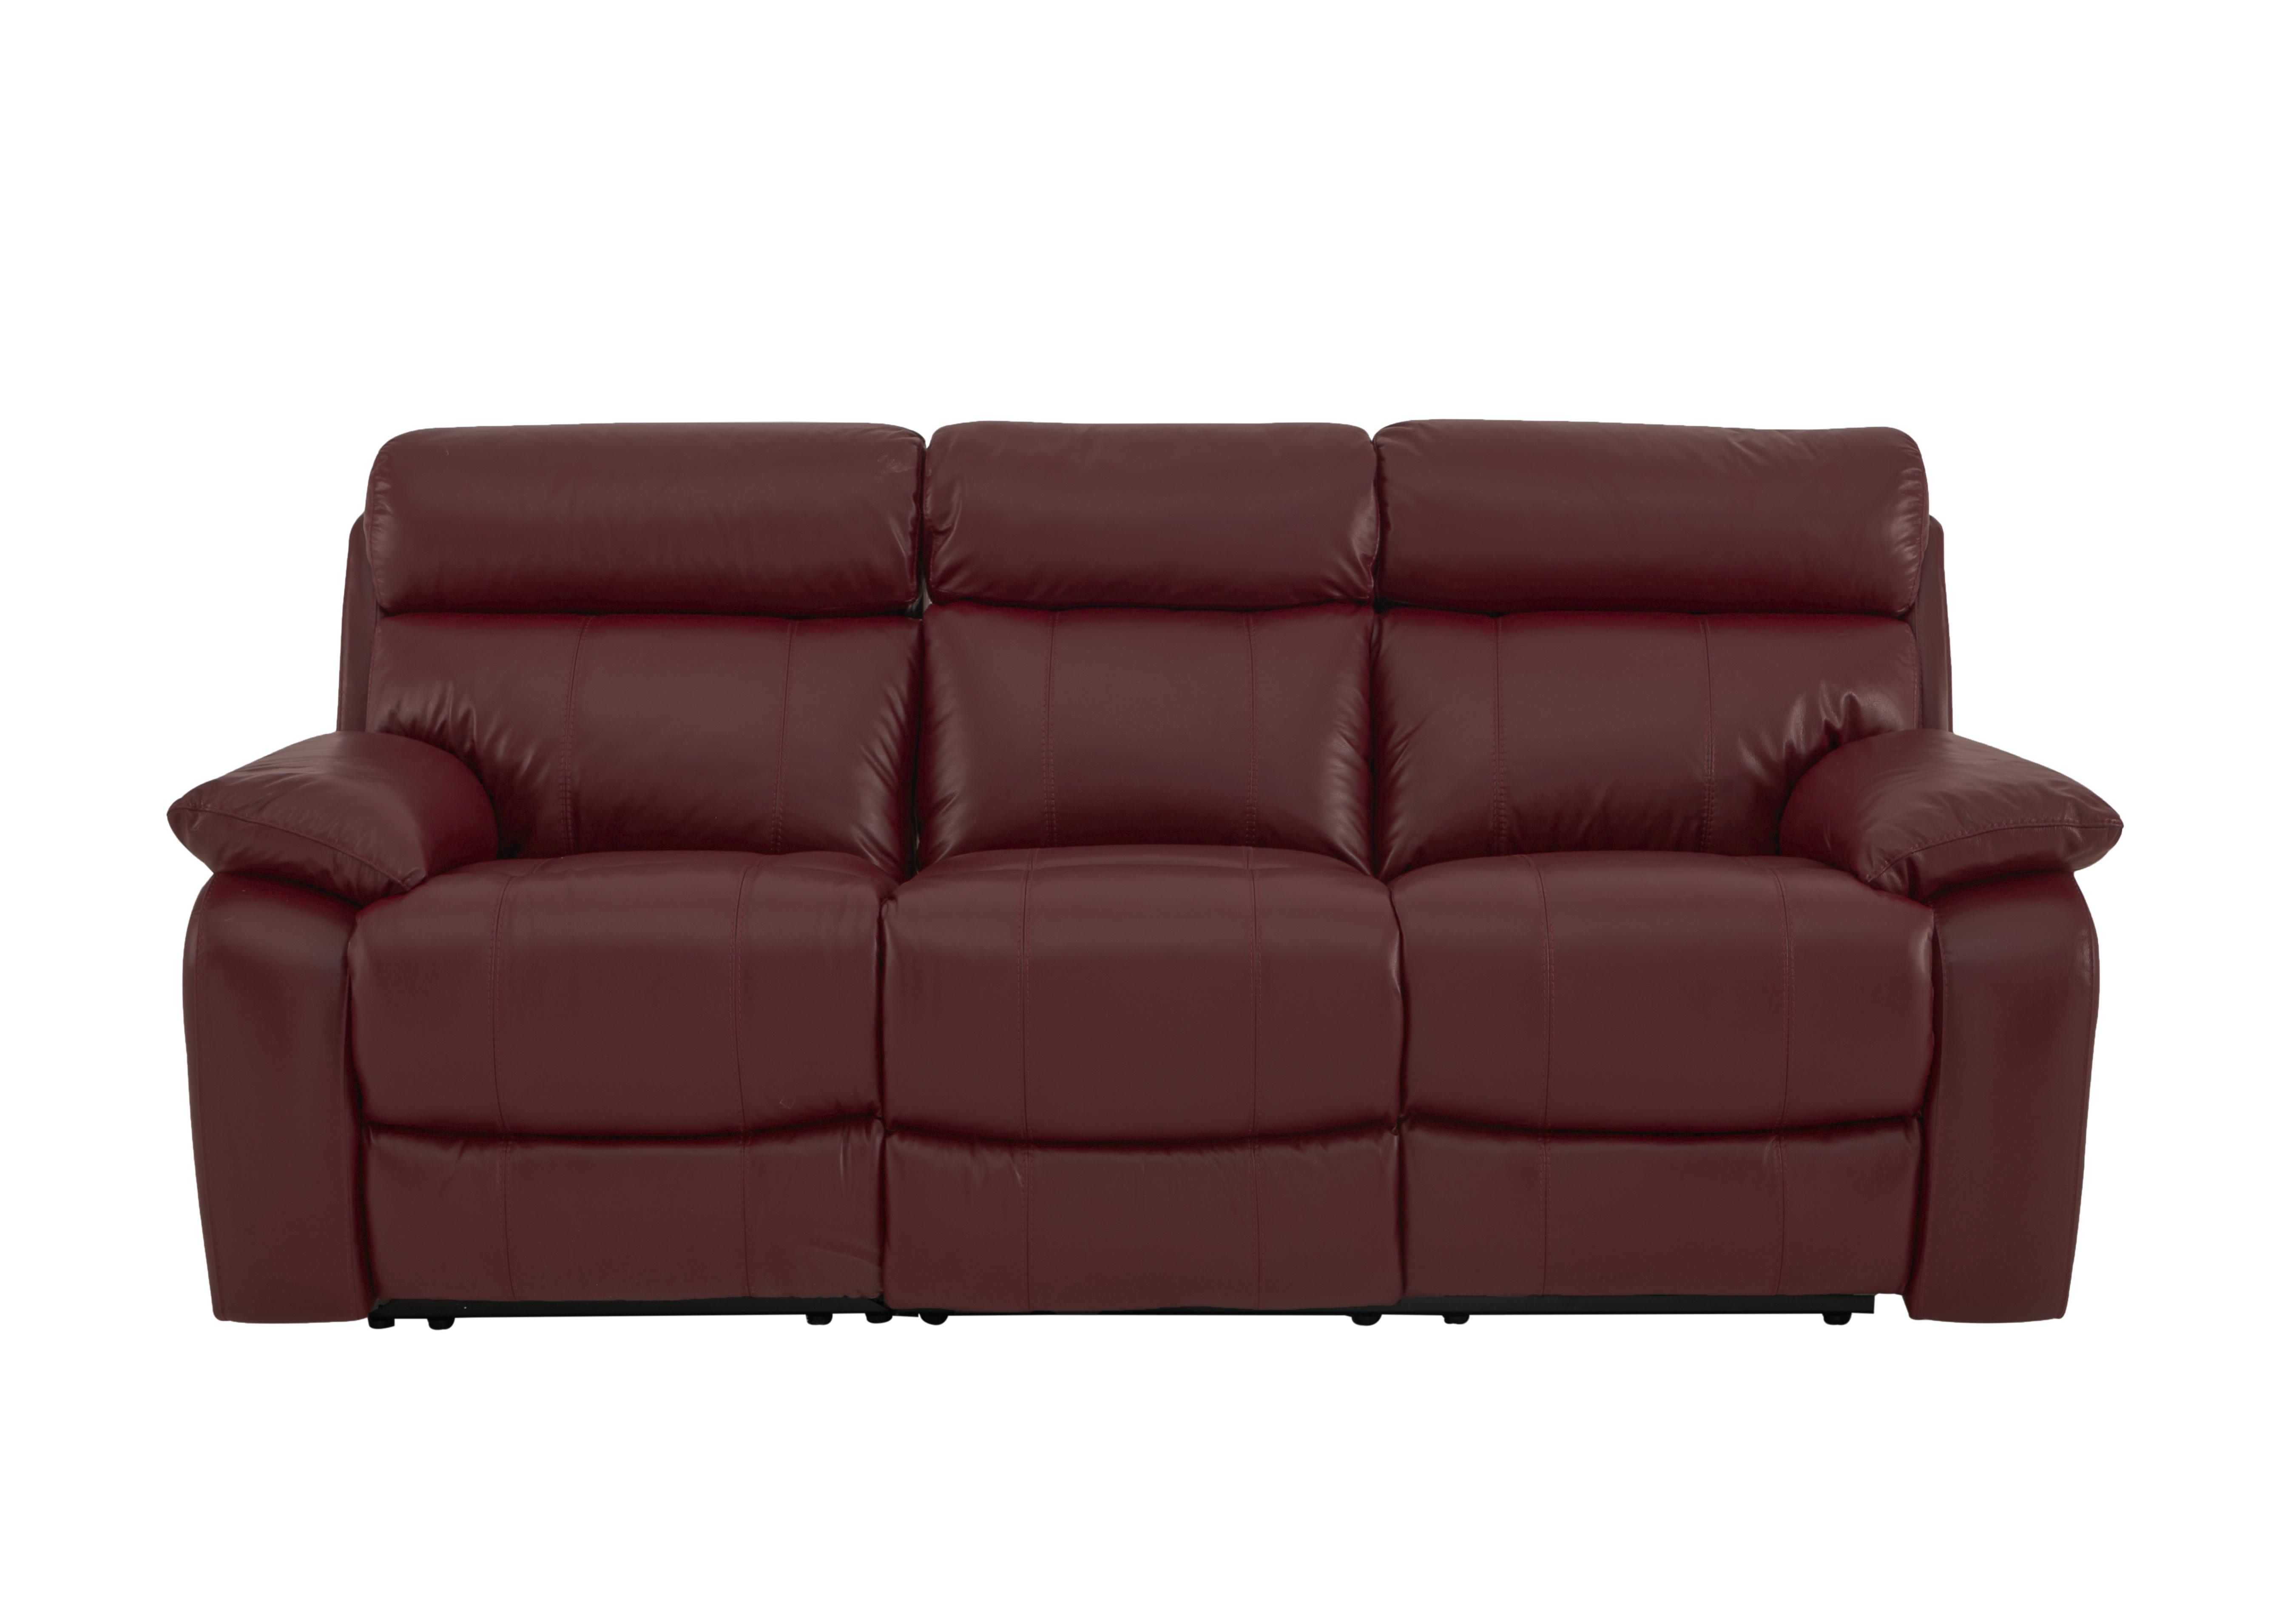 Moreno 3 Seater Leather Sofa in An-751b Burgundy on Furniture Village